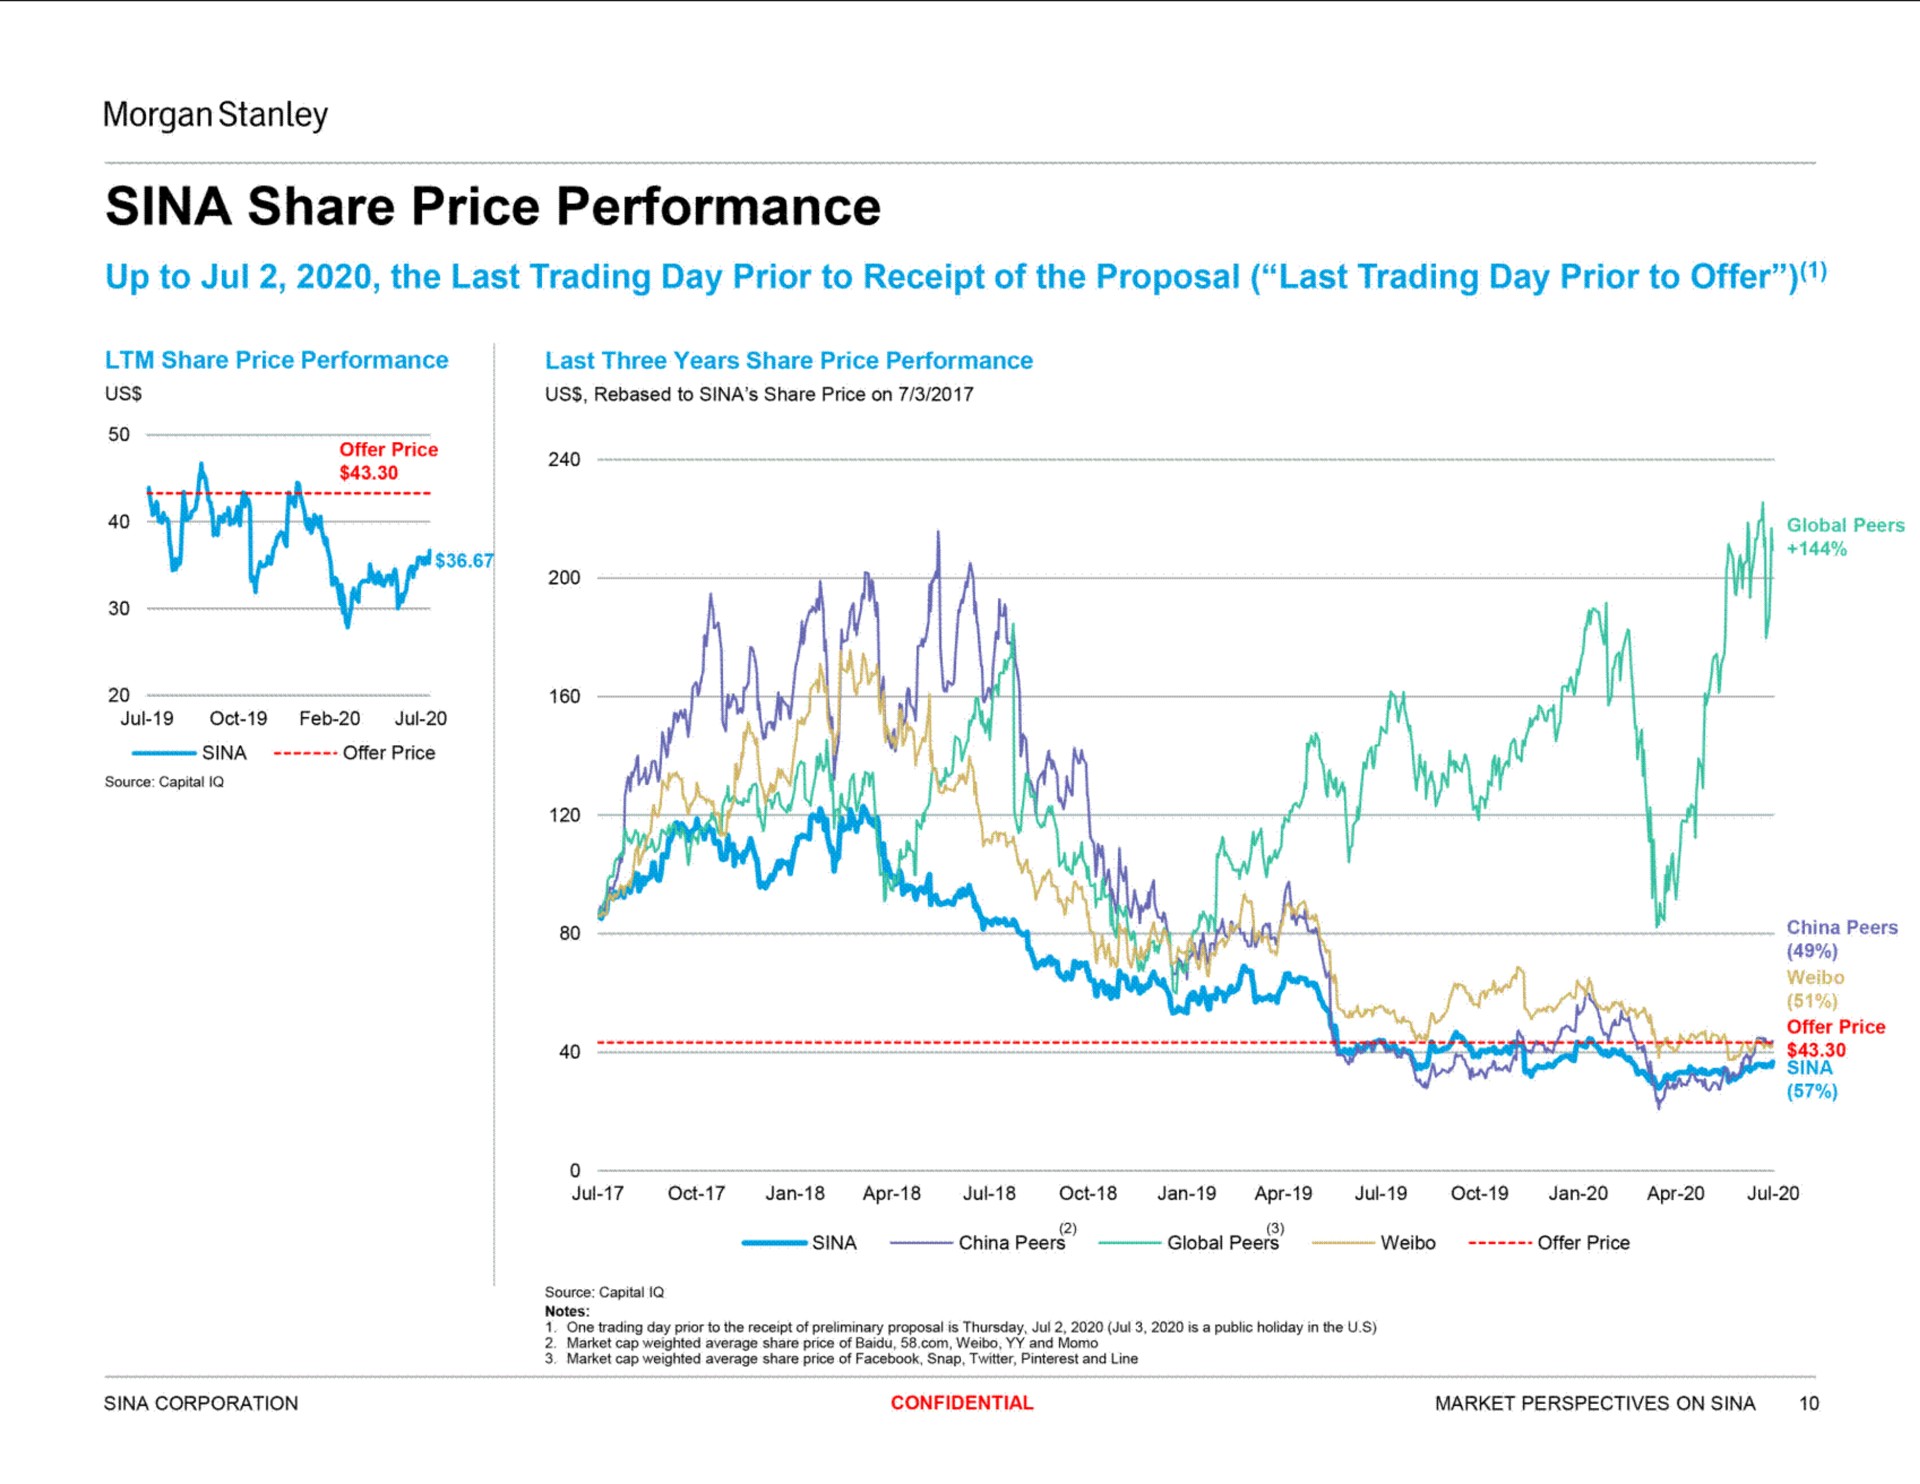 sina share price performance | Morgan Stanley